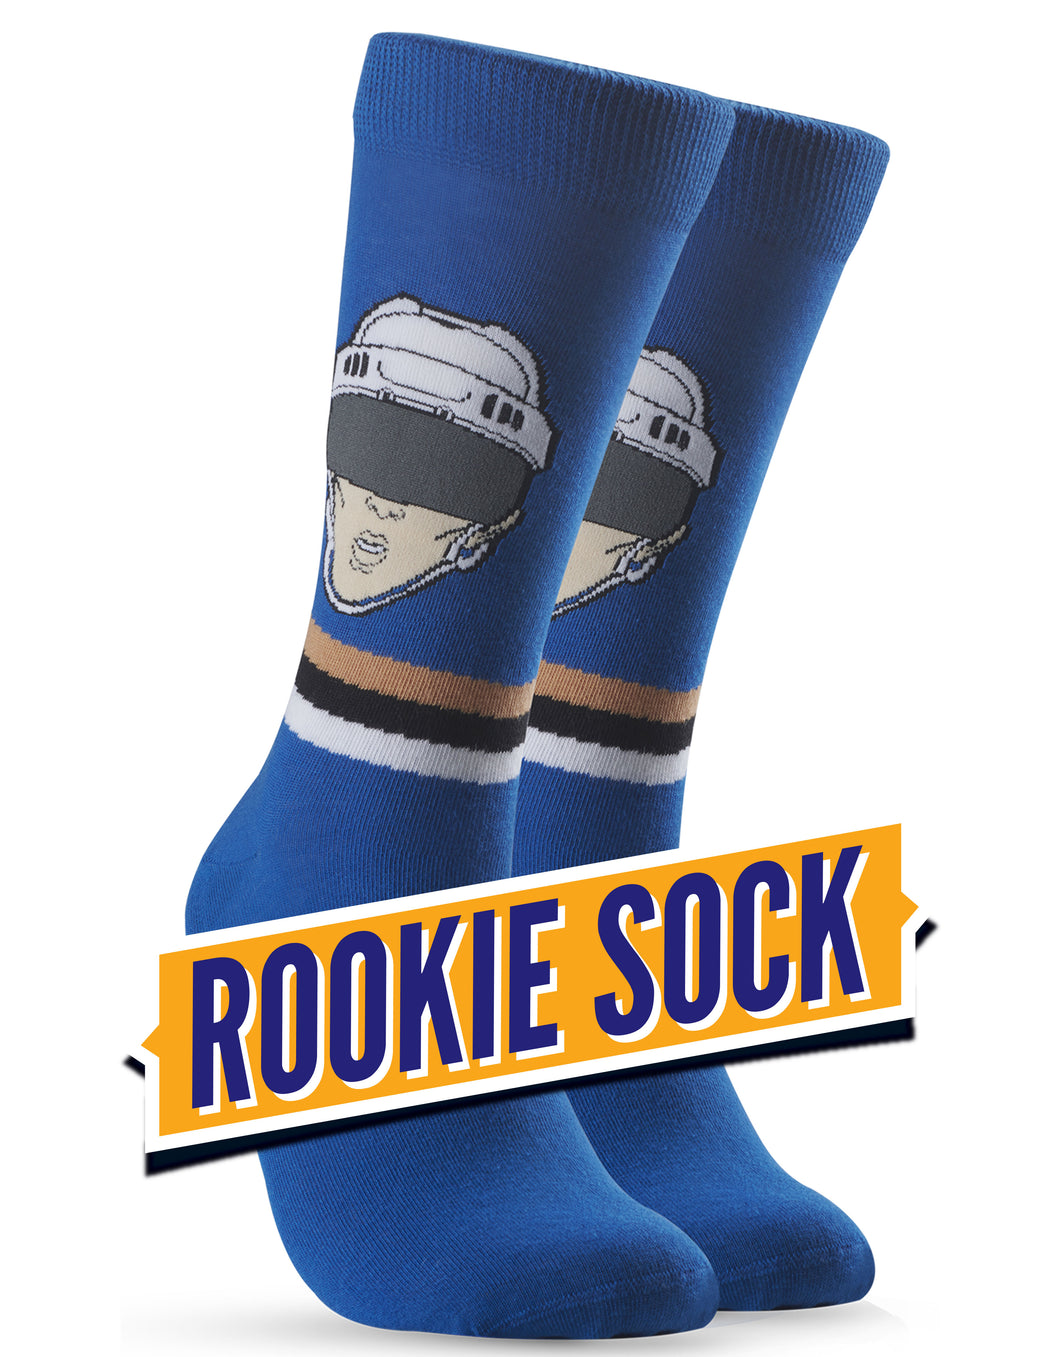 Alex Ovechkin - Rookie Sock